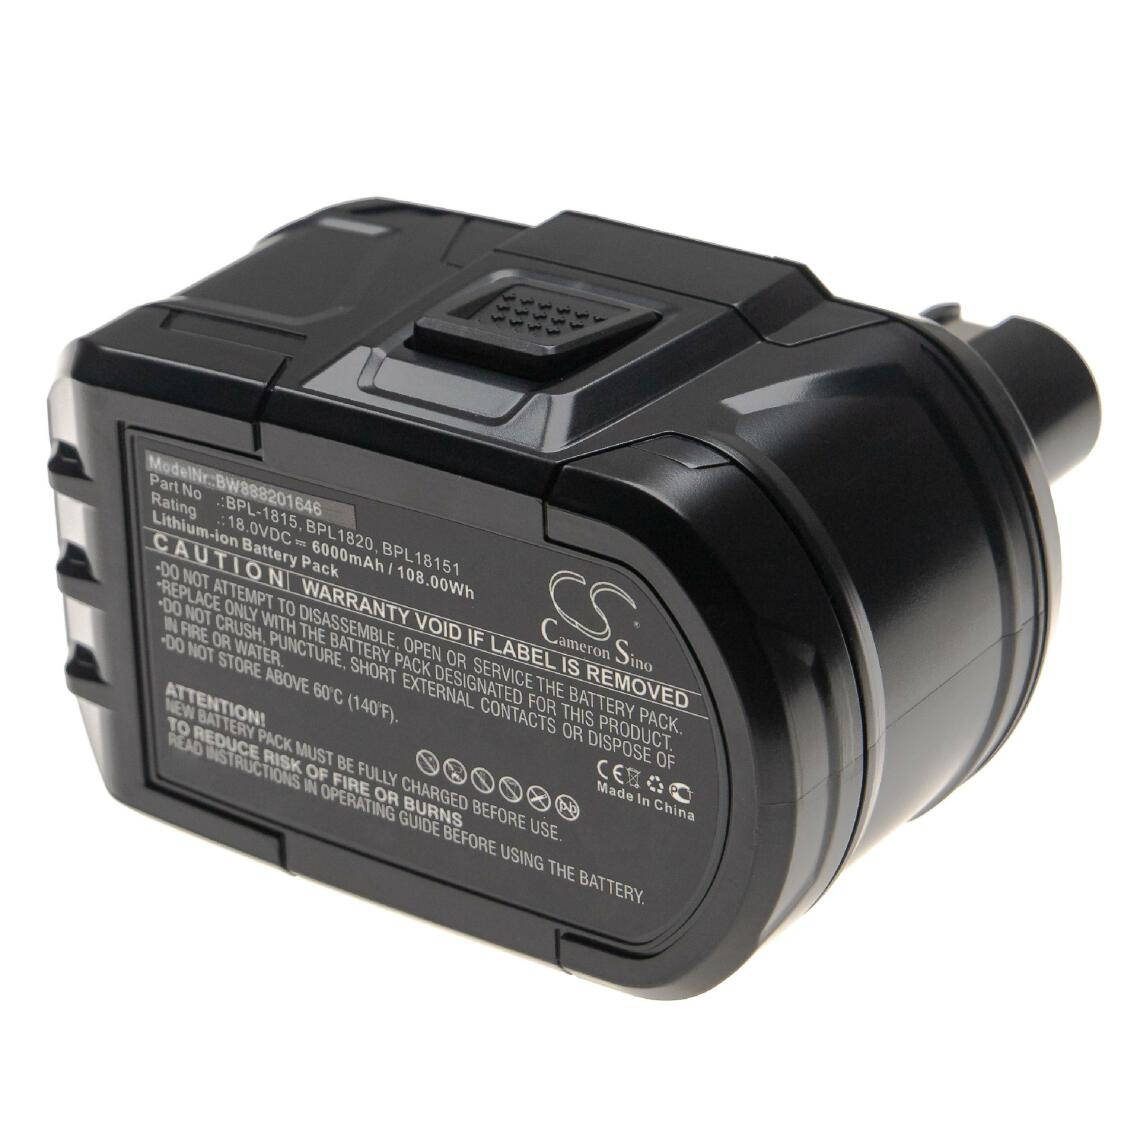 Vhbw - vhbw Batterie compatible avec Ryobi LCD18022B, LCD1802M, LCS-180, LDD-1802, LDD-1802PB, LDD1801PB outil électrique (6000mAh Li-Ion 18V) - Clouterie